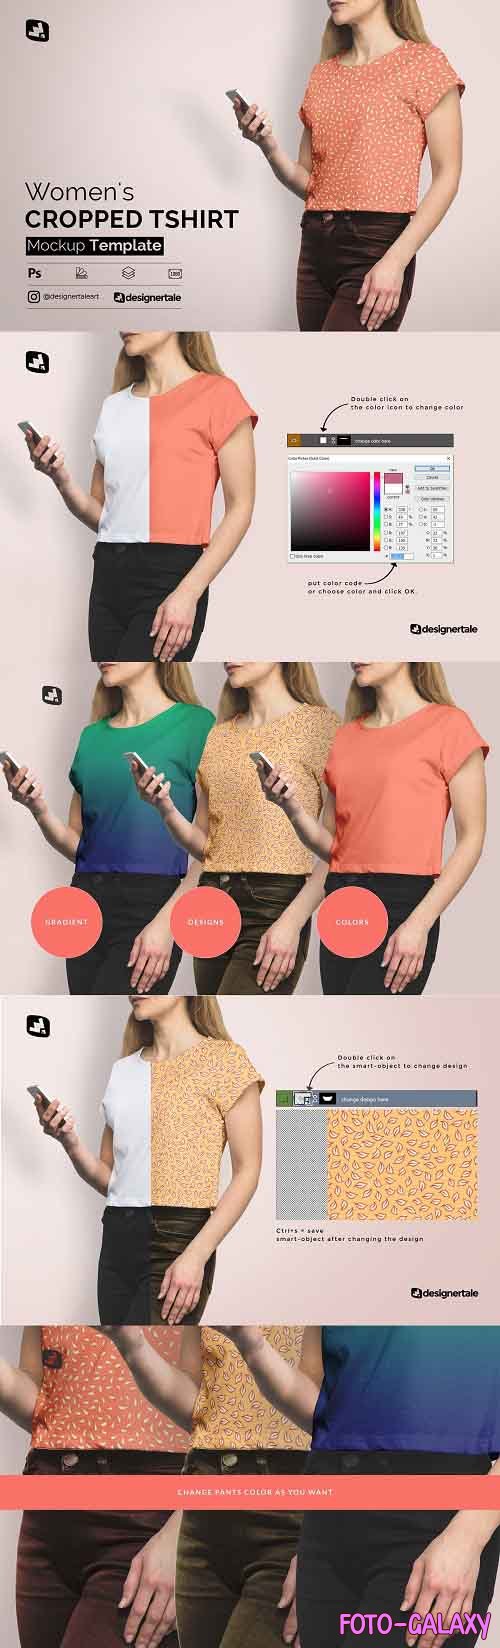 CreativeMarket - Women's Cropped Tshirt Mockup 4728864